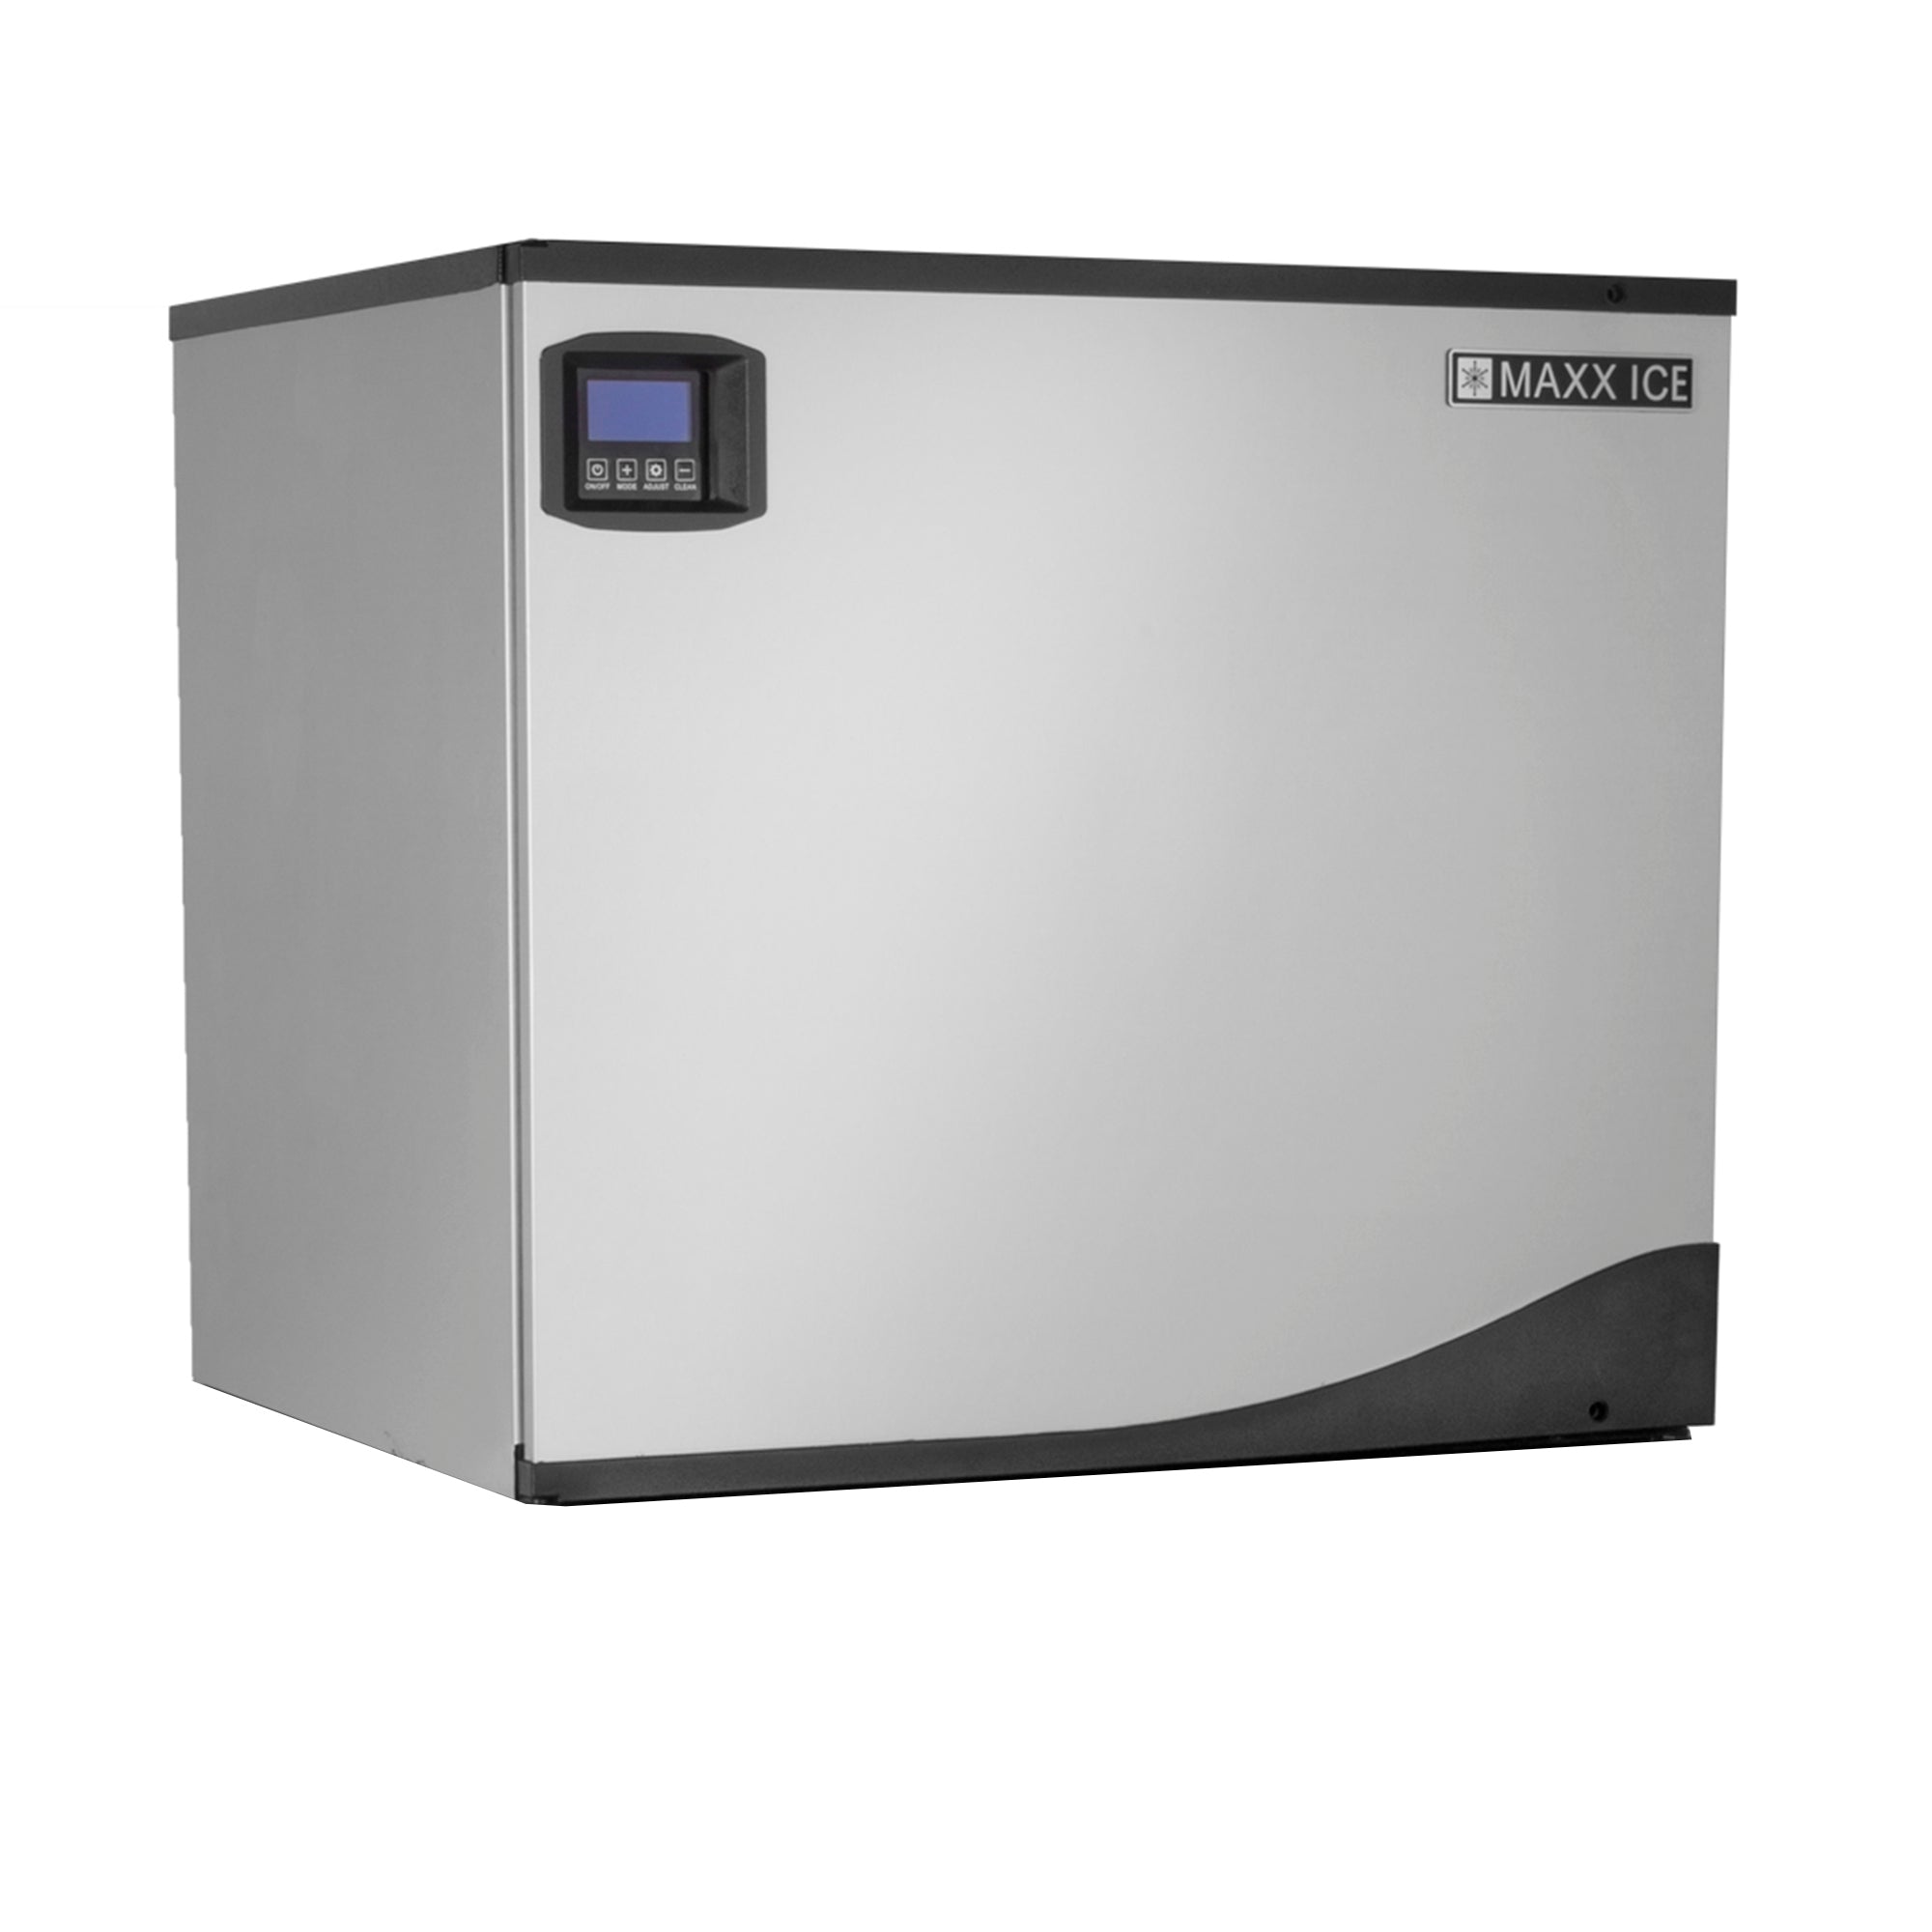 Maxx Ice - MIM650N, Maxx Ice Intelligent Series Modular Ice Machine, 30"W, 650 lbs, Full Dice Ice Cubes, in Stainless Steel